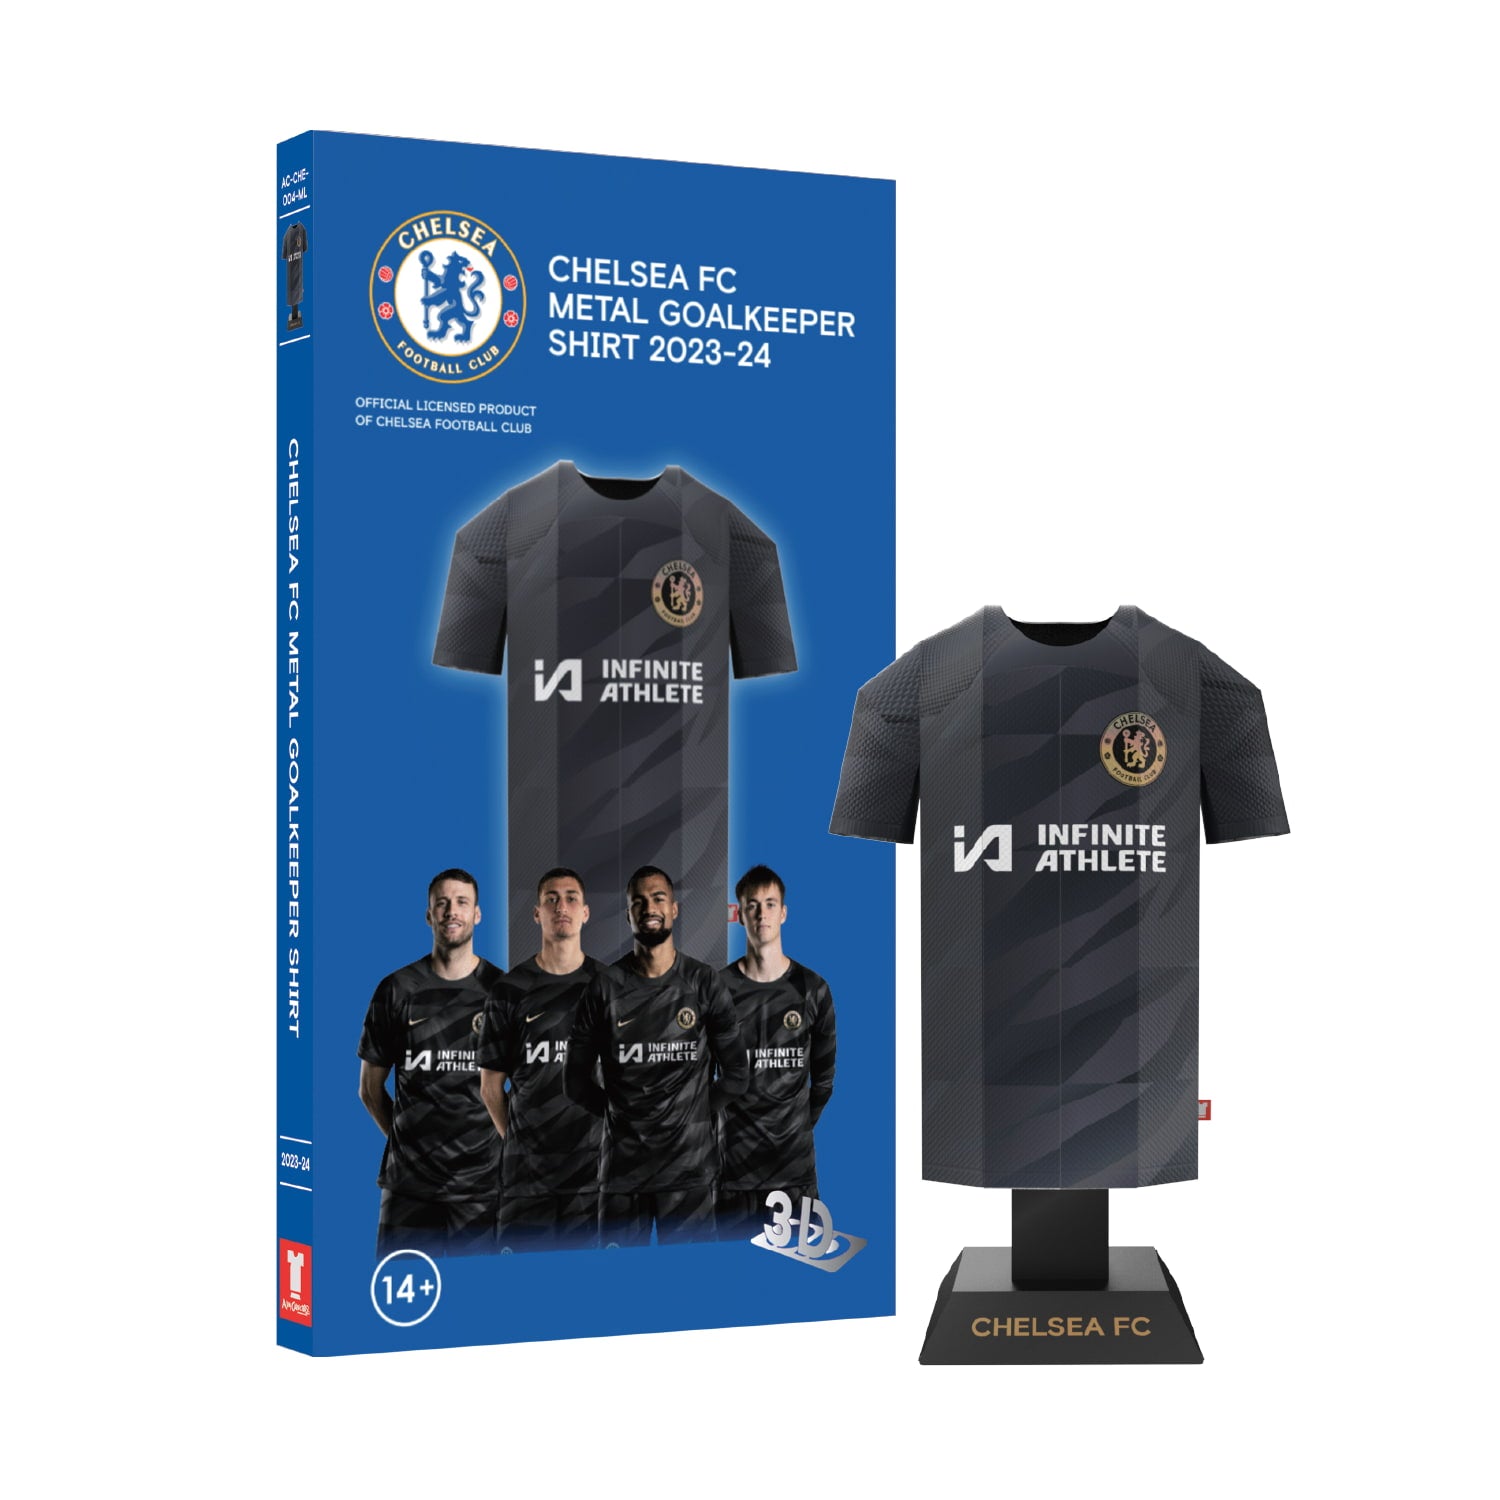 Chelsea goalkeeper kit with exclusive packaging